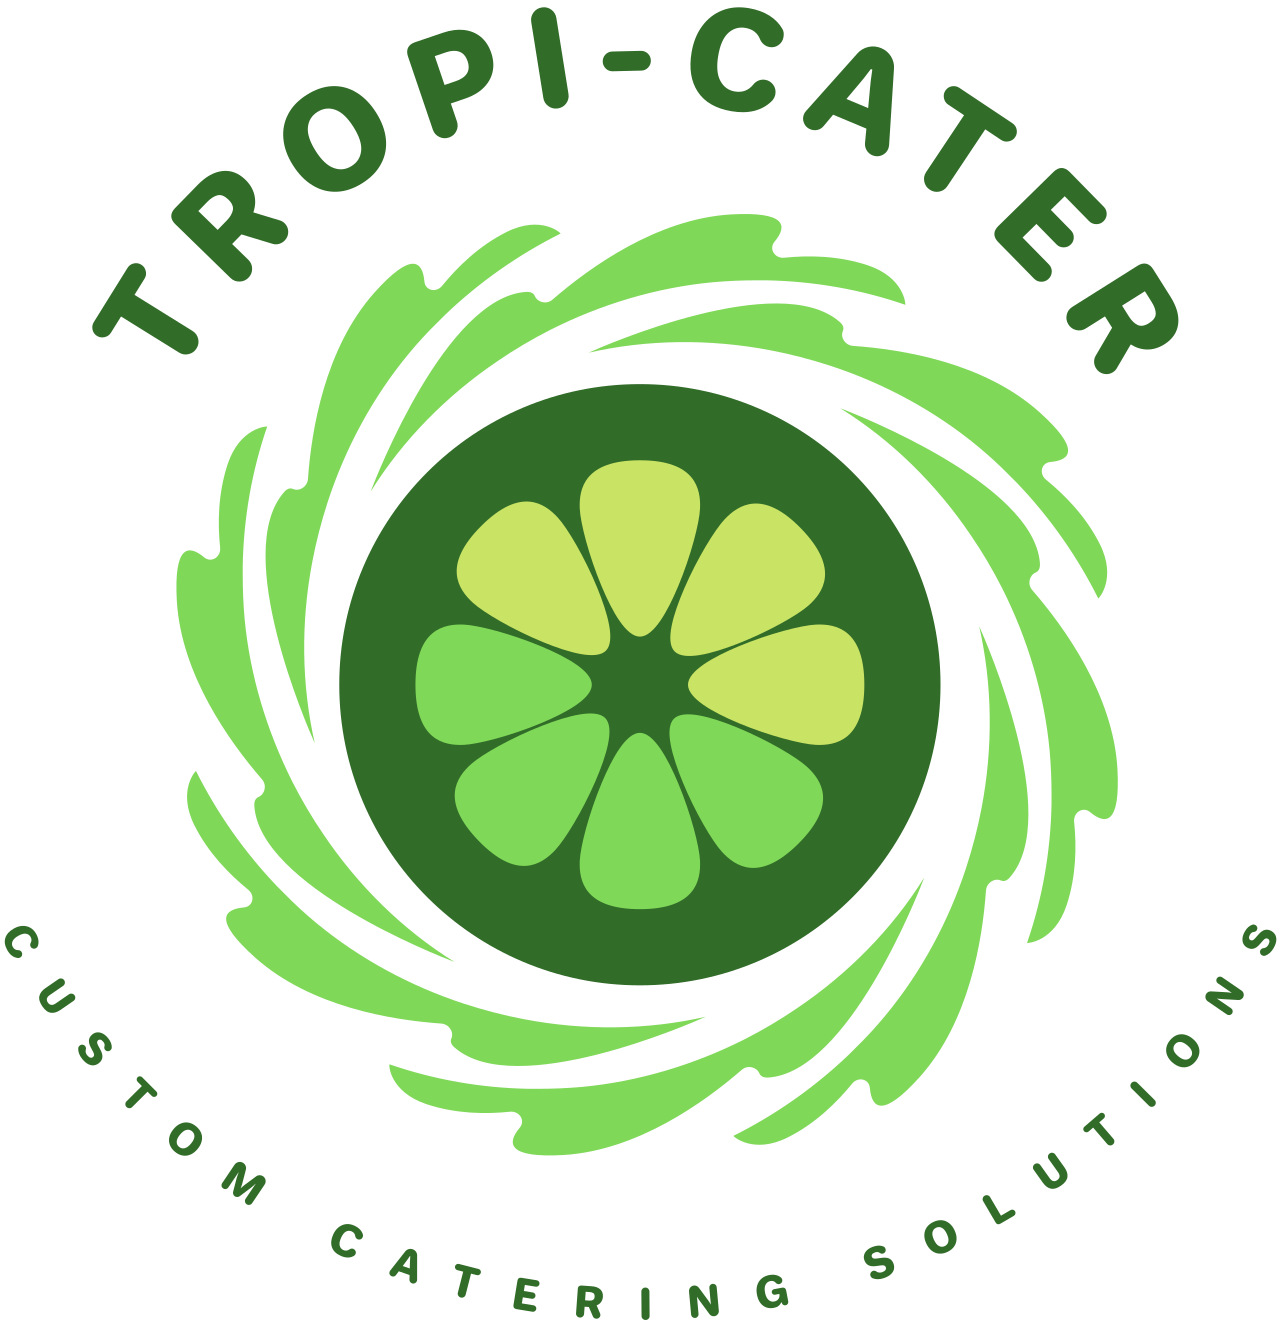 TROPI-CATER's logo